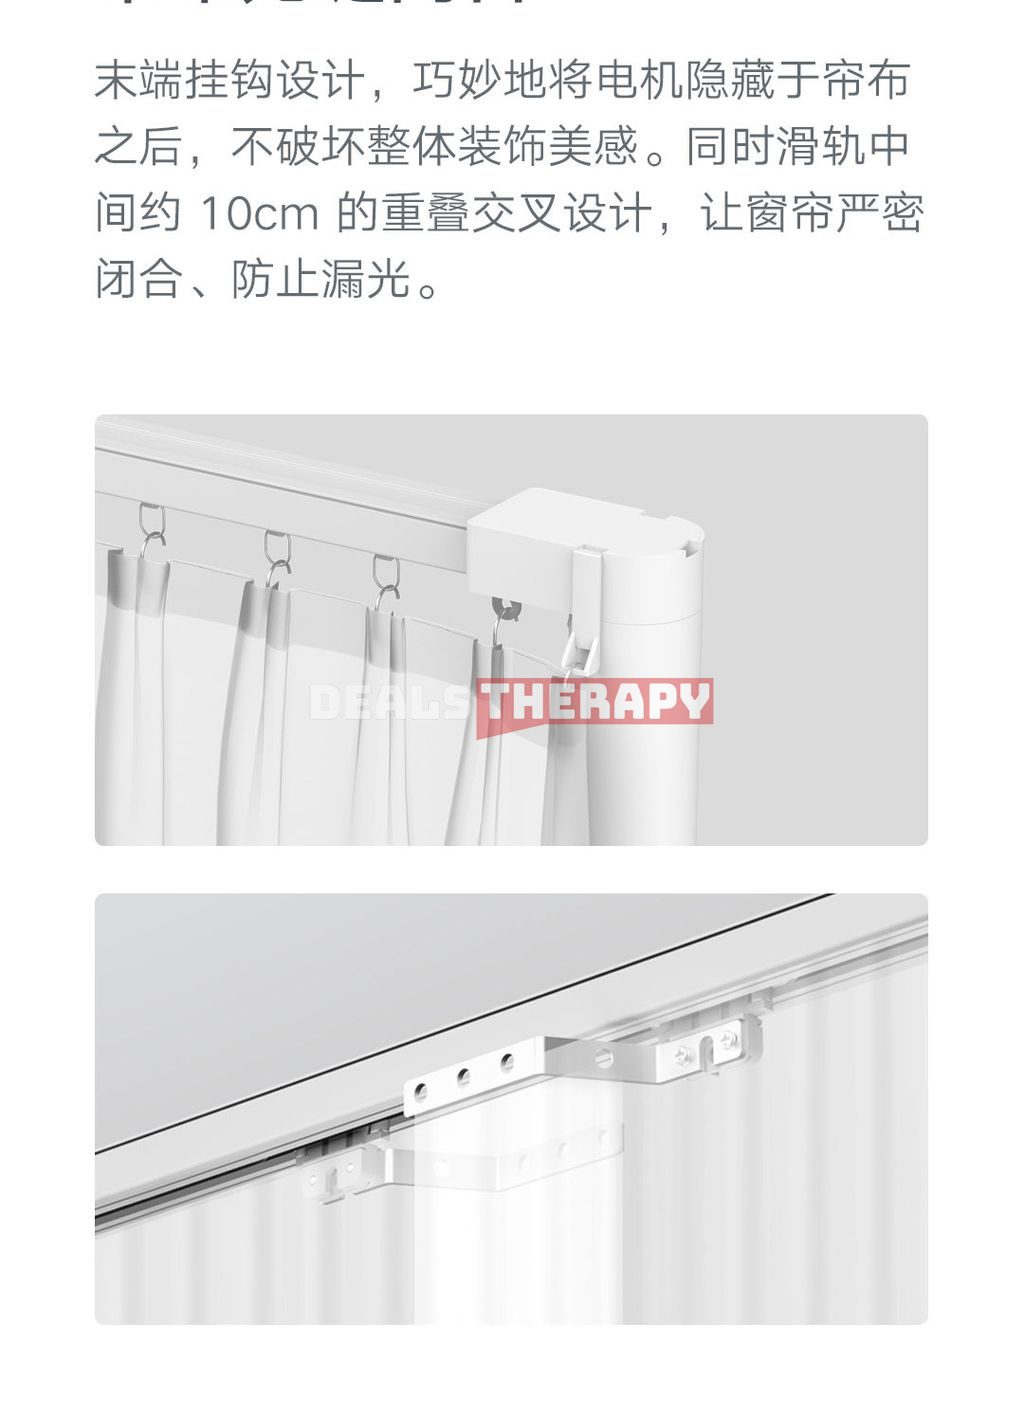 Xiaomi Mijia Smart Curtain